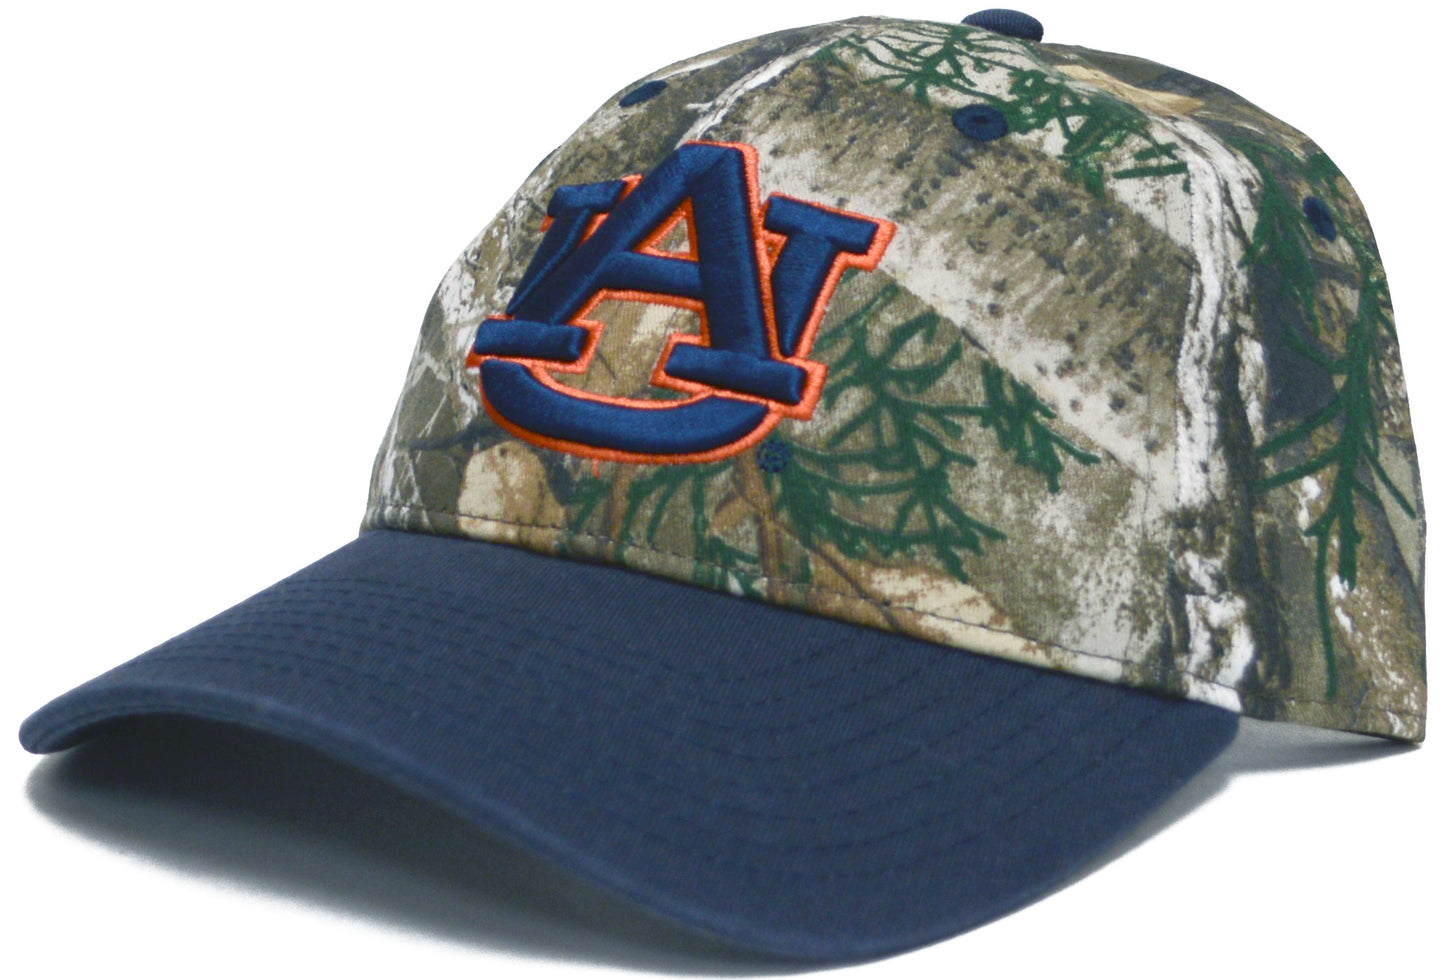 Auburn Tigers The Game Men's Edge Camo Strapback Adjustable Hat